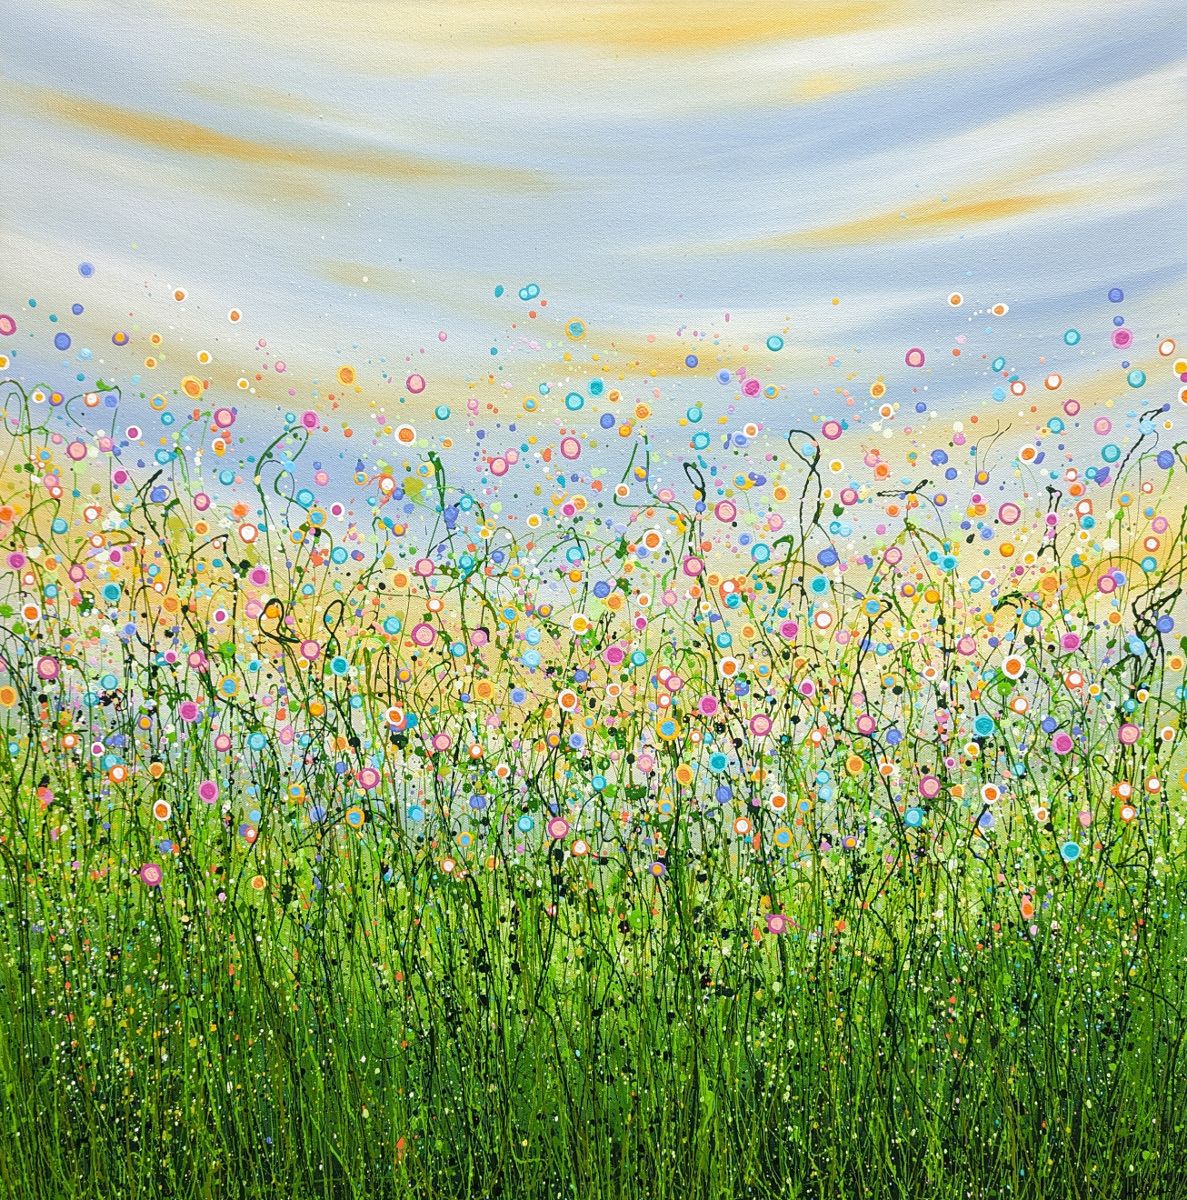 Summer Sprinkles by Lucy Moore